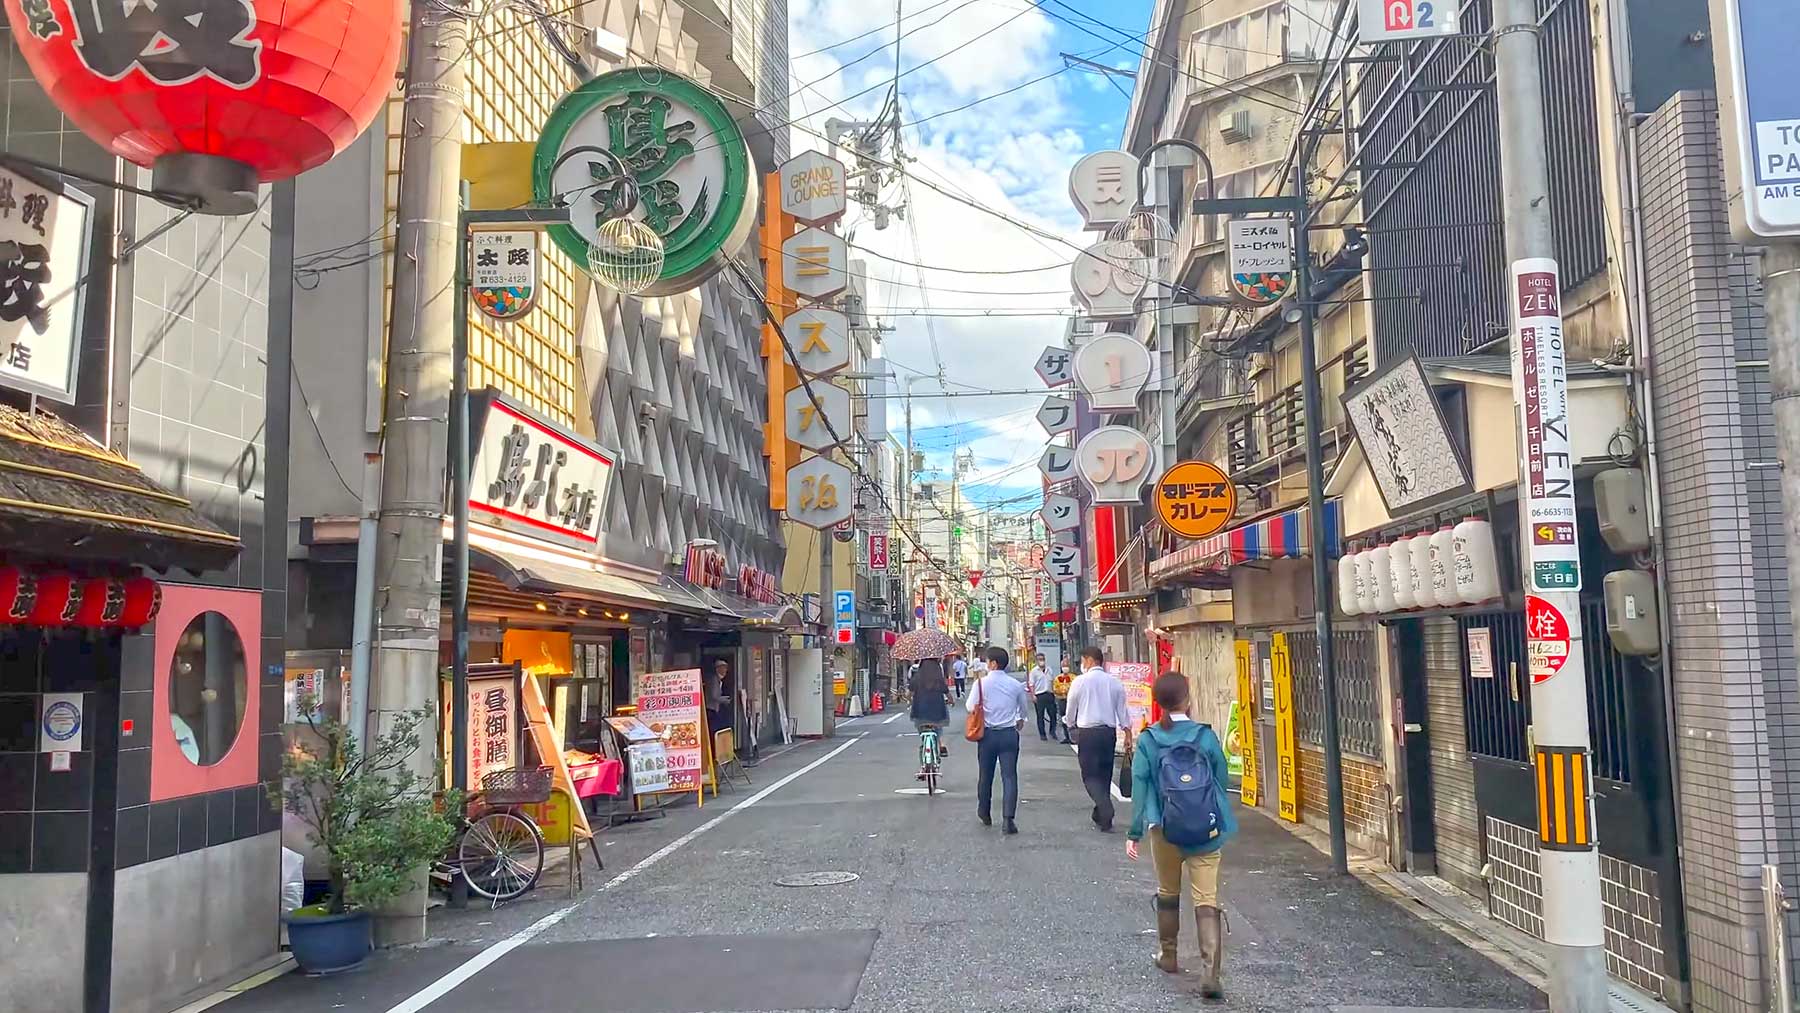 30-minütiger Video-Spaziergang durch Osaka